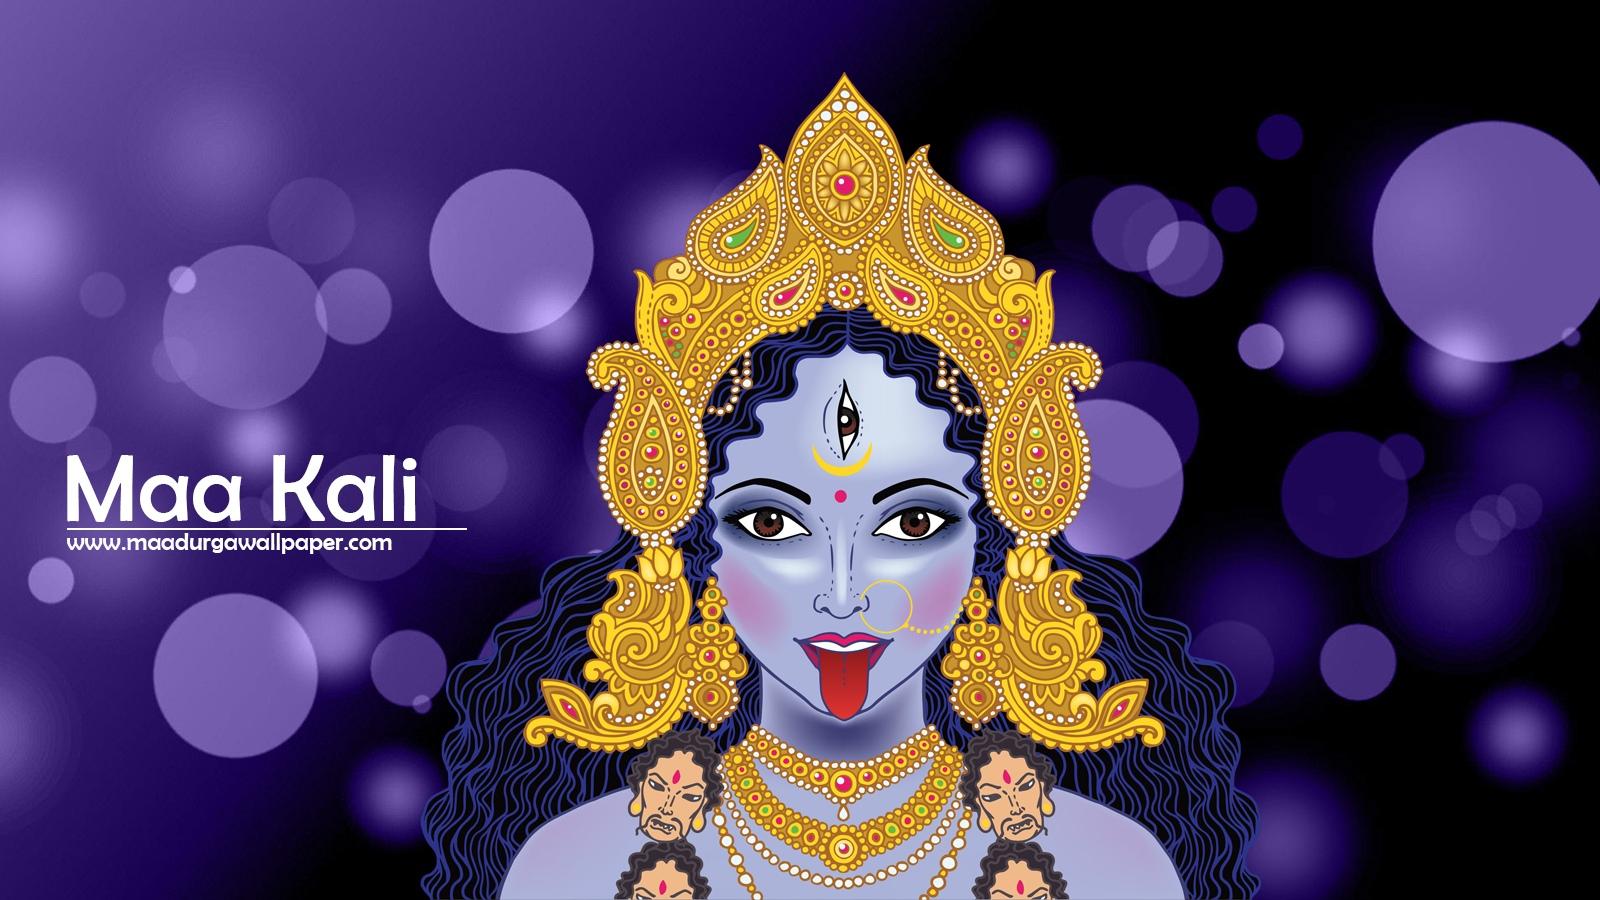 Maa Kali Wallpaper, HD image, pics download free